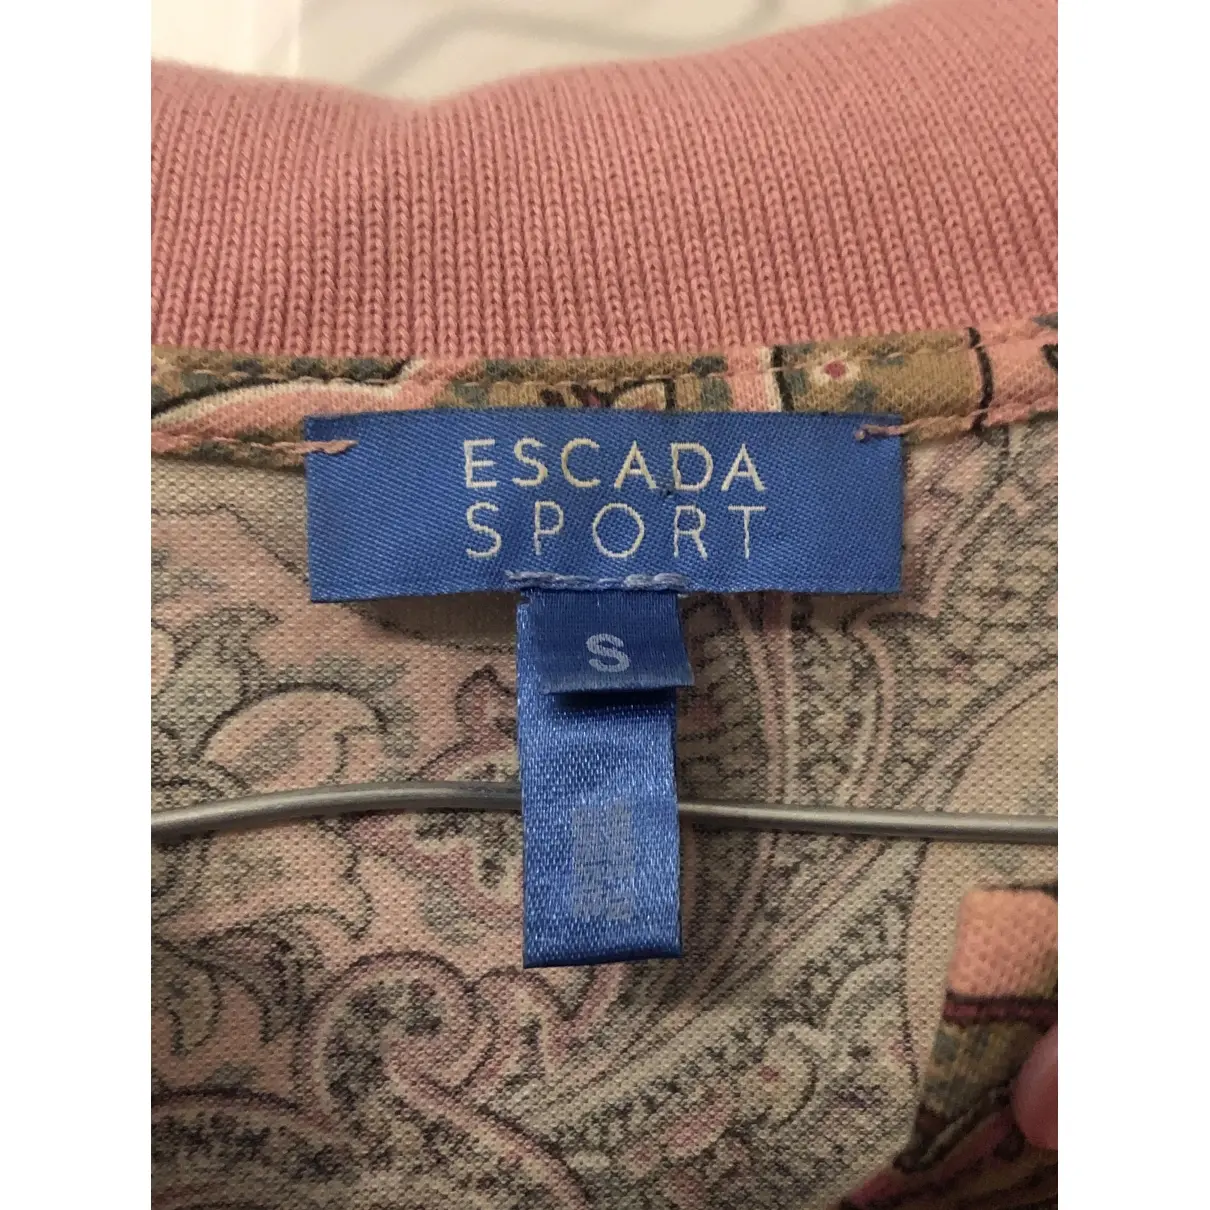 Buy Escada T-shirt online